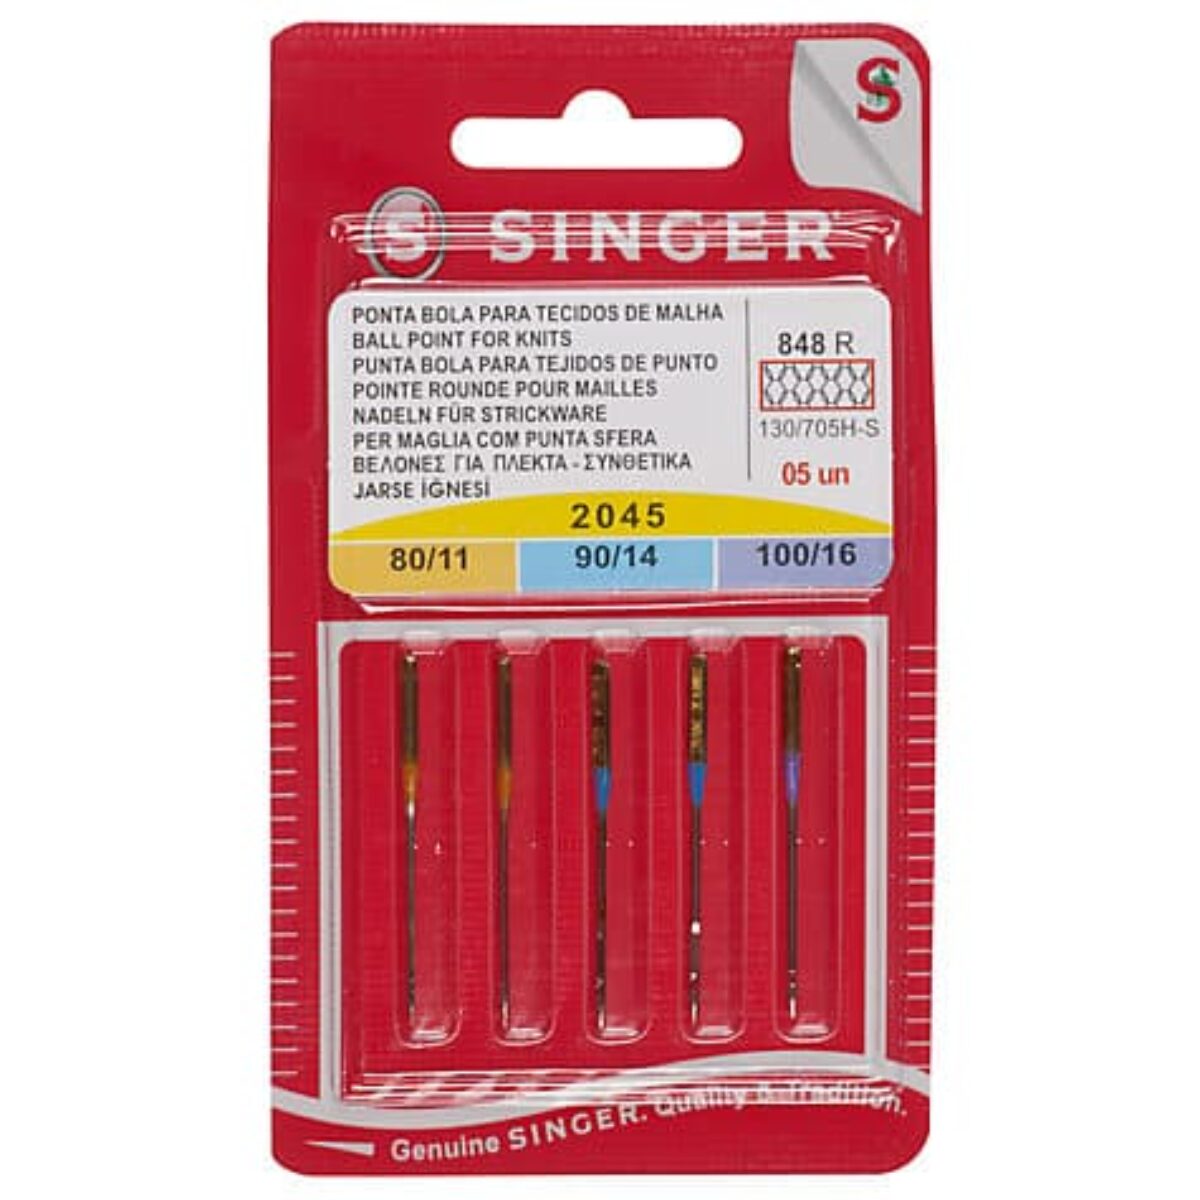 Singer 2045 sz14 10/pkg Singer Sewing Machine Needles